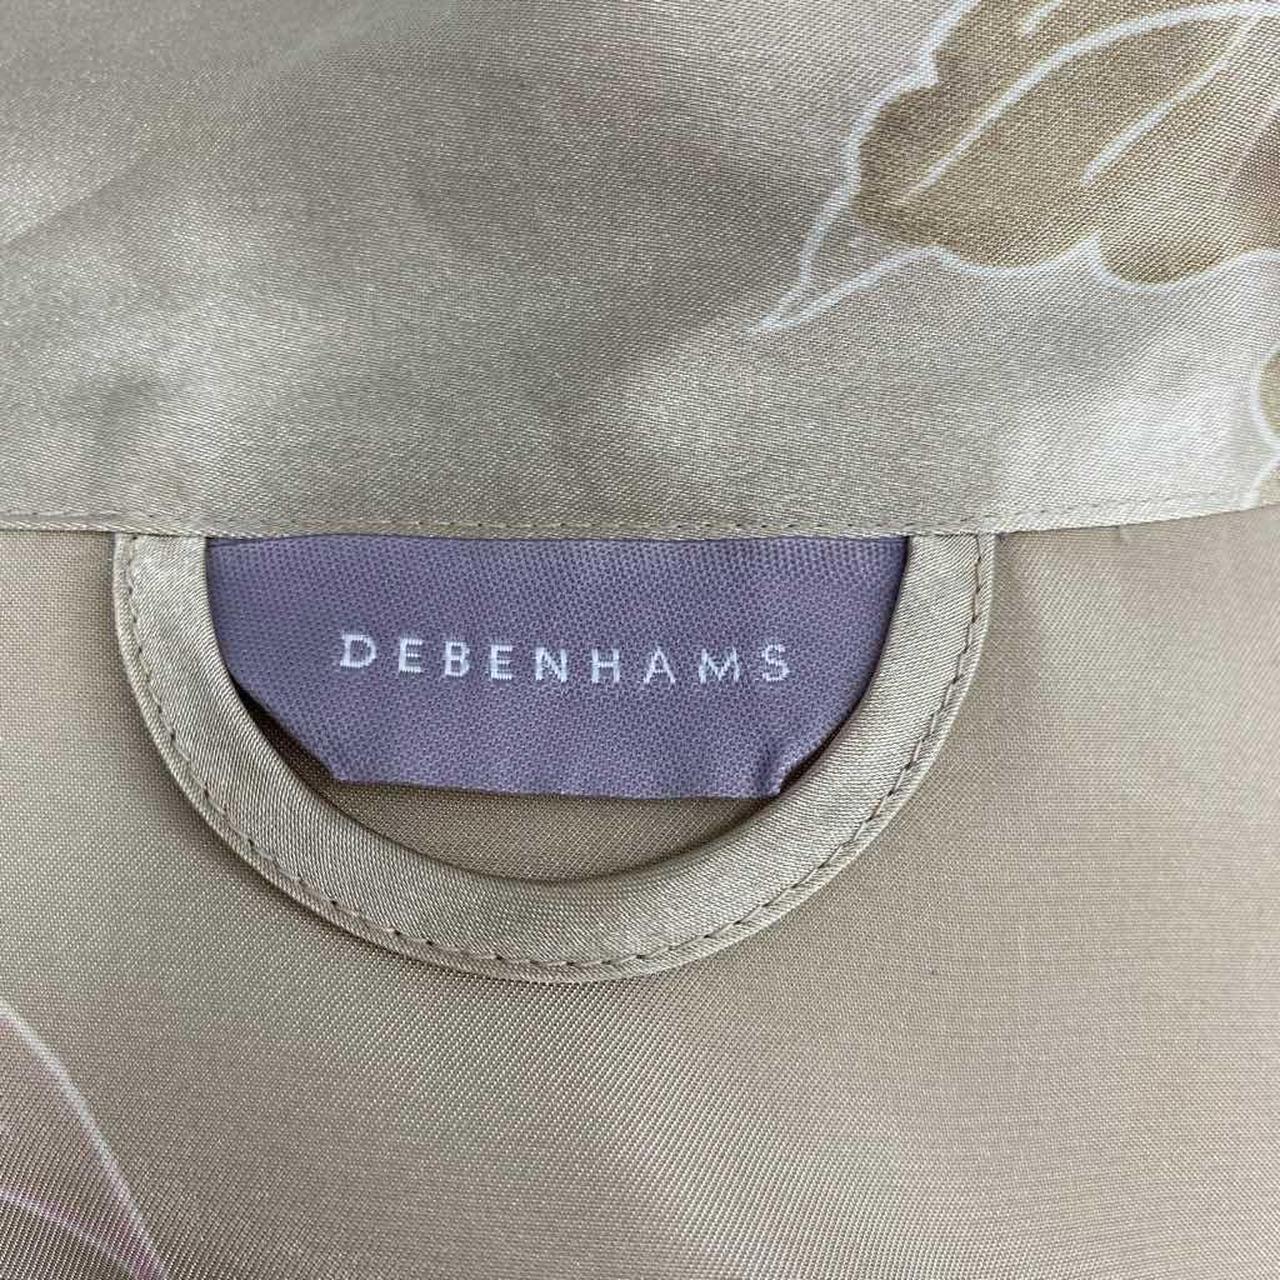 Debenhams Women's Tan and Pink Robe (4)